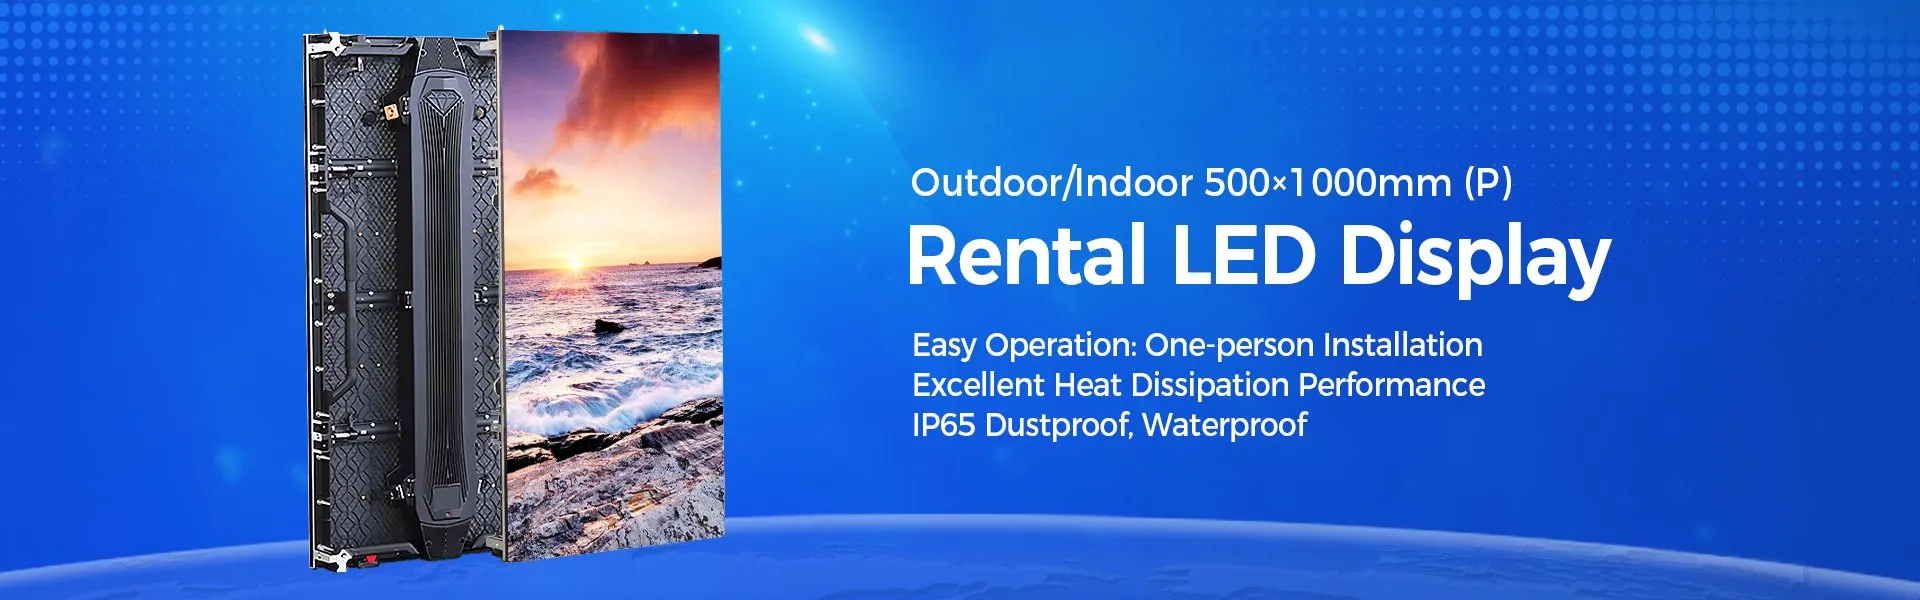 P1.9 P2.5 P2.6 P2.9 P3.9 P4.8 P5.9 Outdoor Indoor 1000×500 Rental LED Display 1000P series